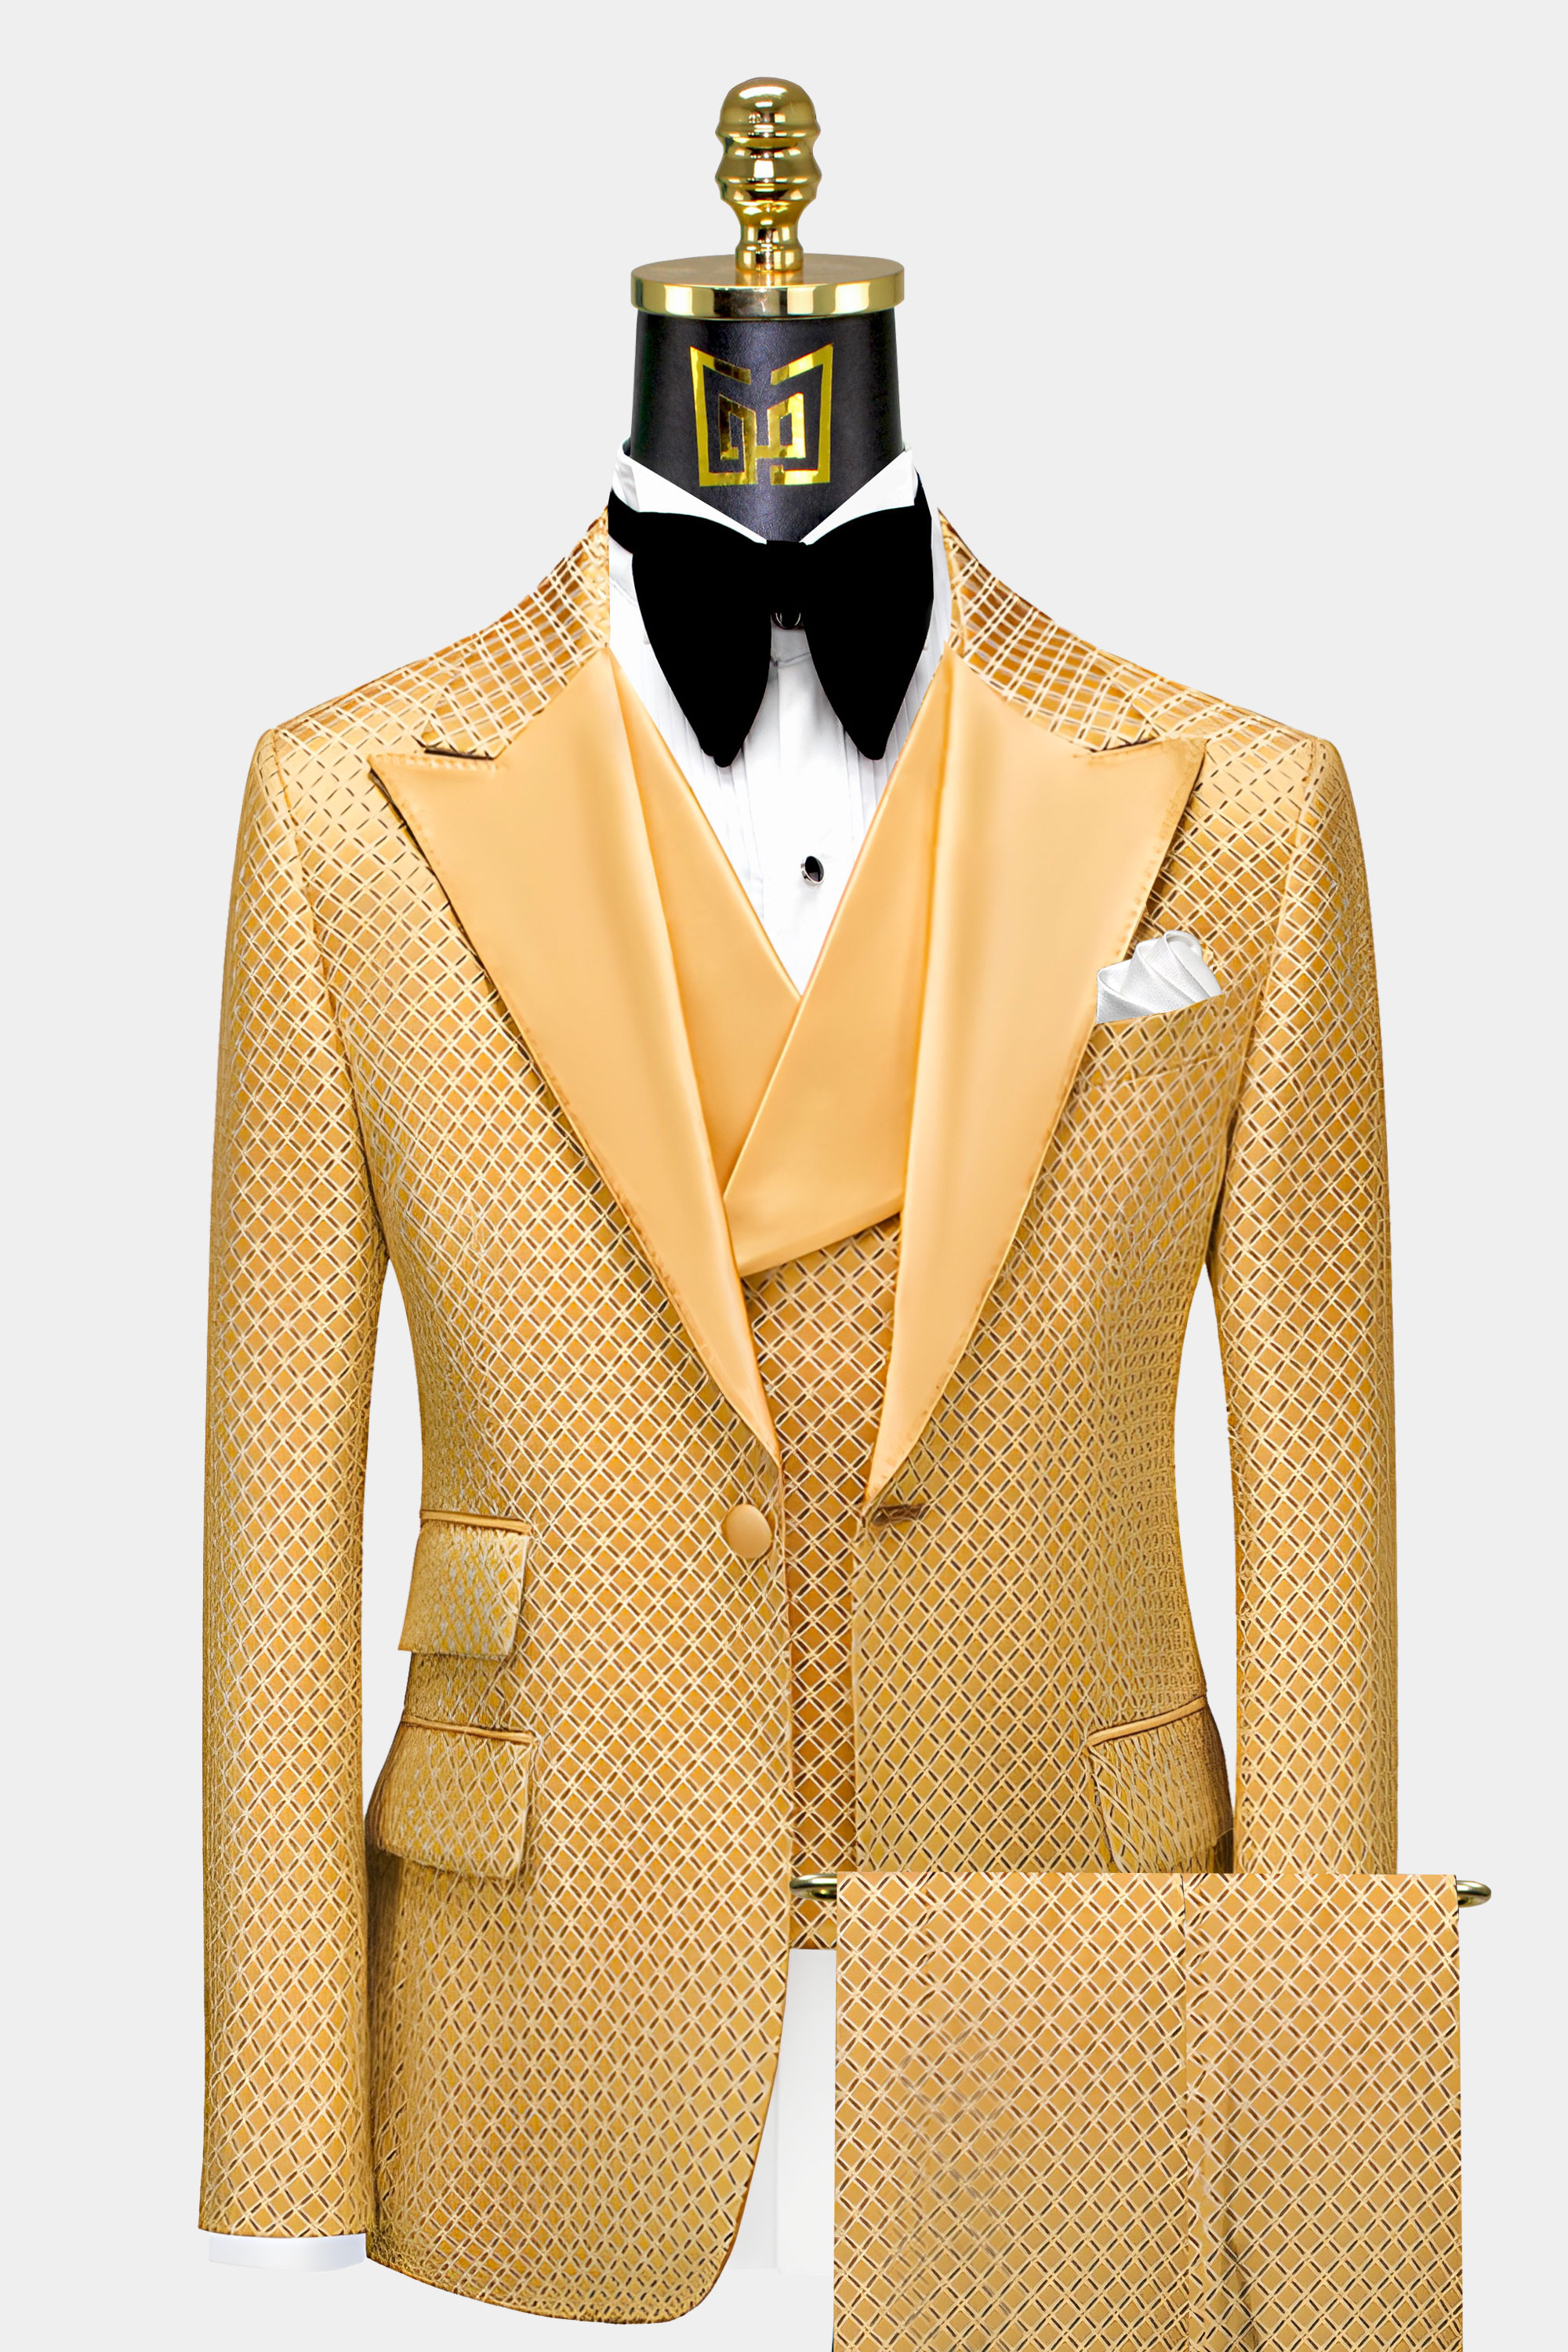 Mens-Gold-Checkered-Tuxedo-Wedding-Groom-Prom-Suit-from-Gentlemansguru.com